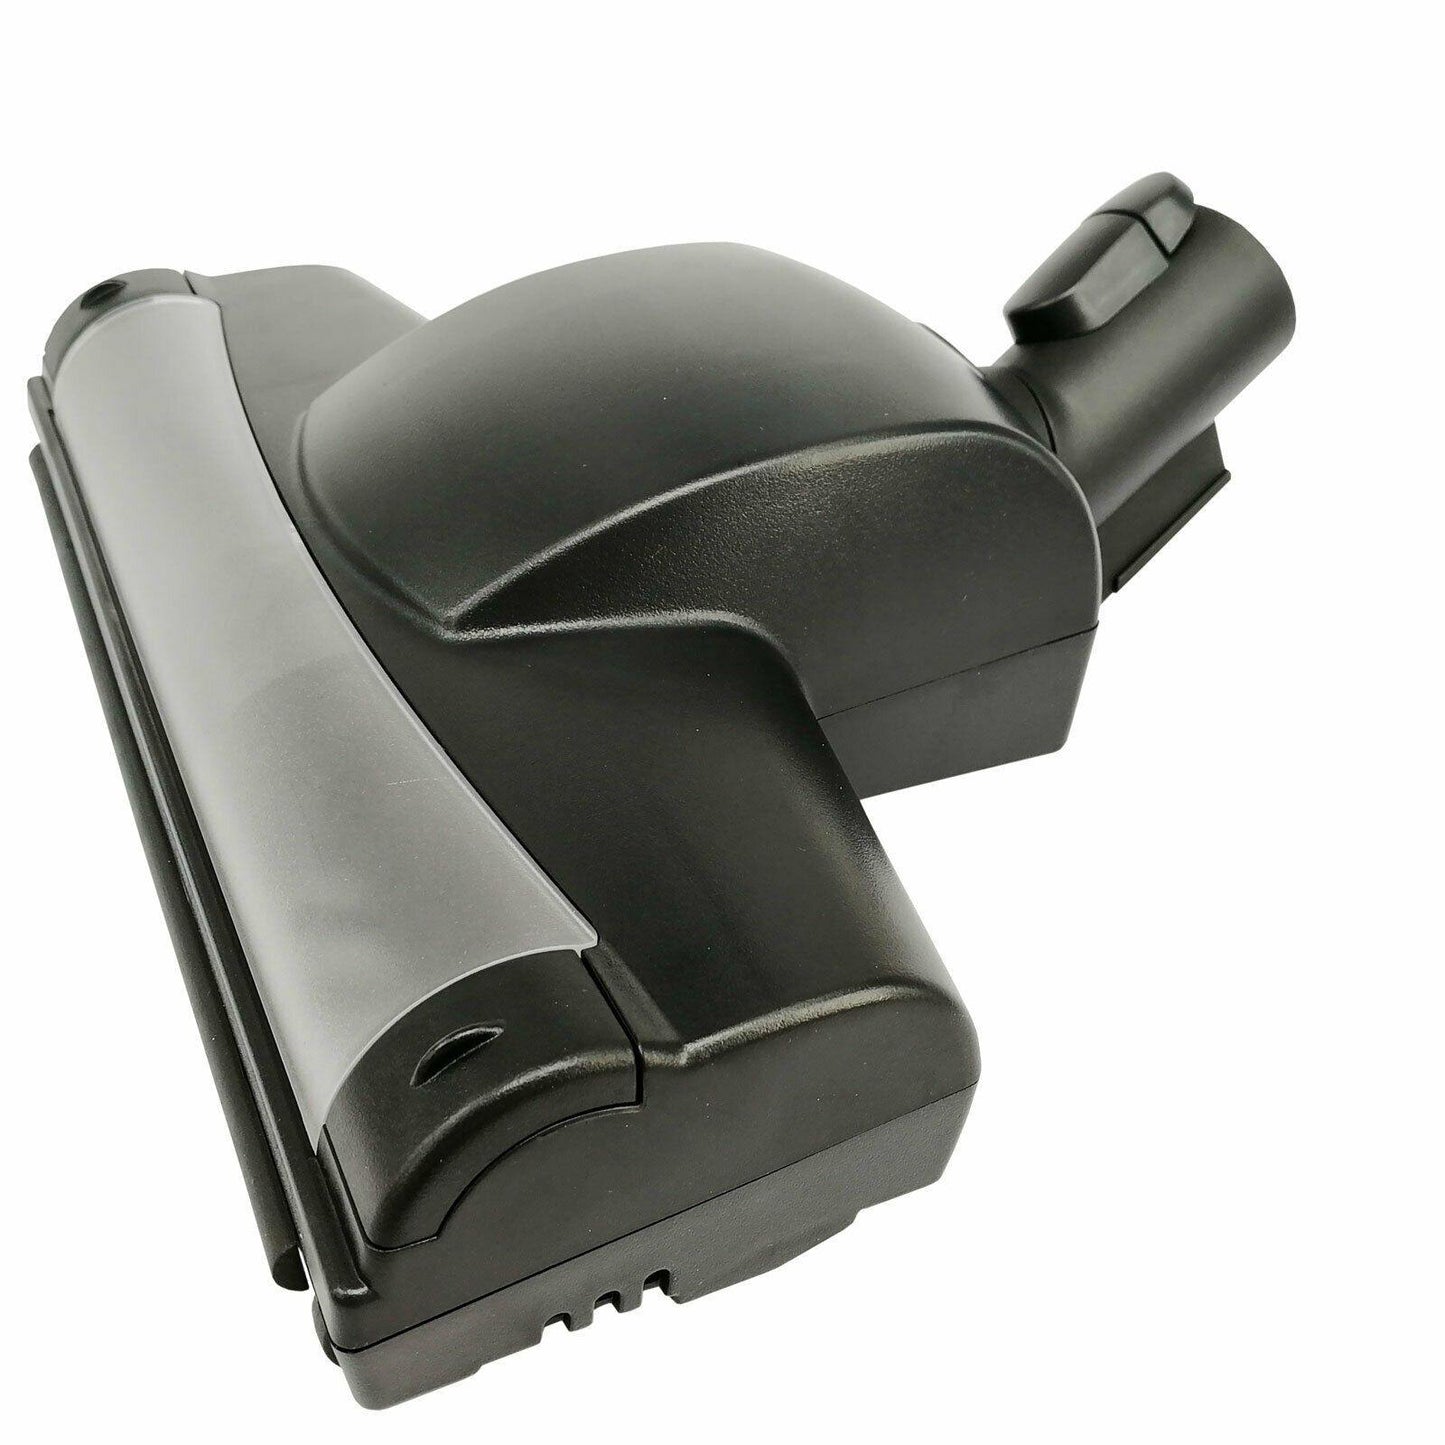 Interlock Turbo Floor Head Nozzle Tool For Miele S5281 Exclusive Edition S5211 Sparesbarn